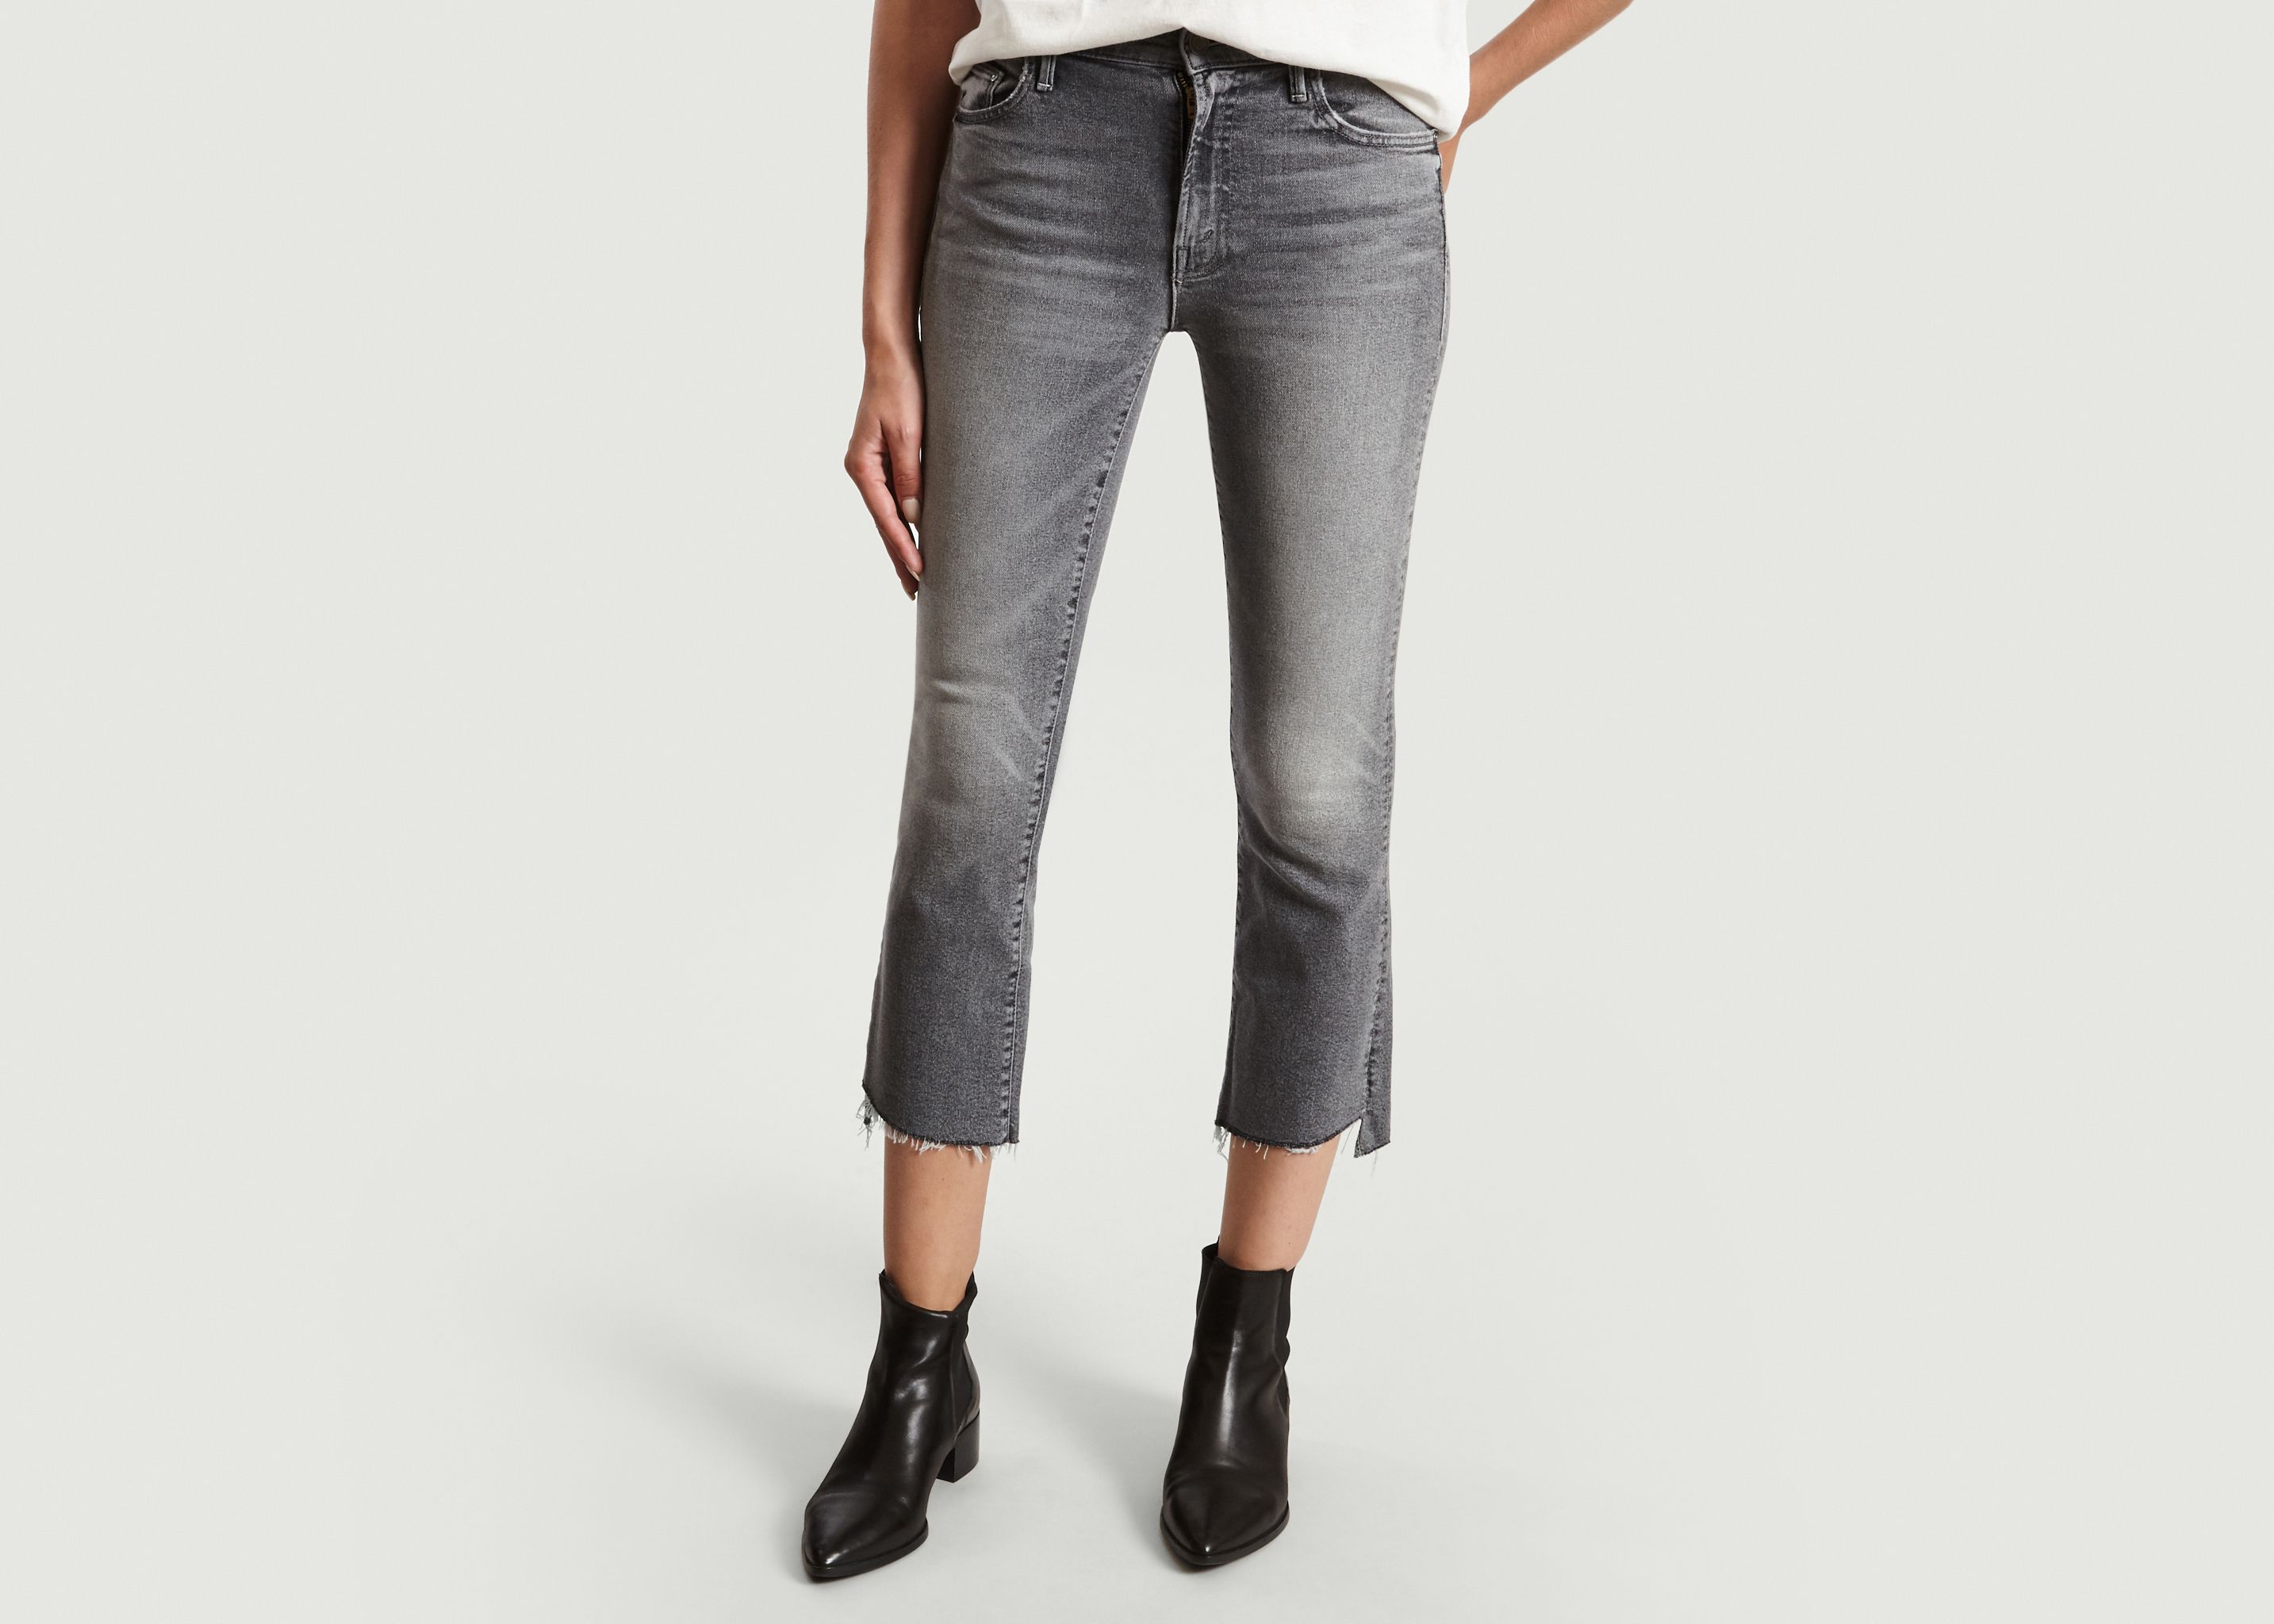 grey frayed jeans